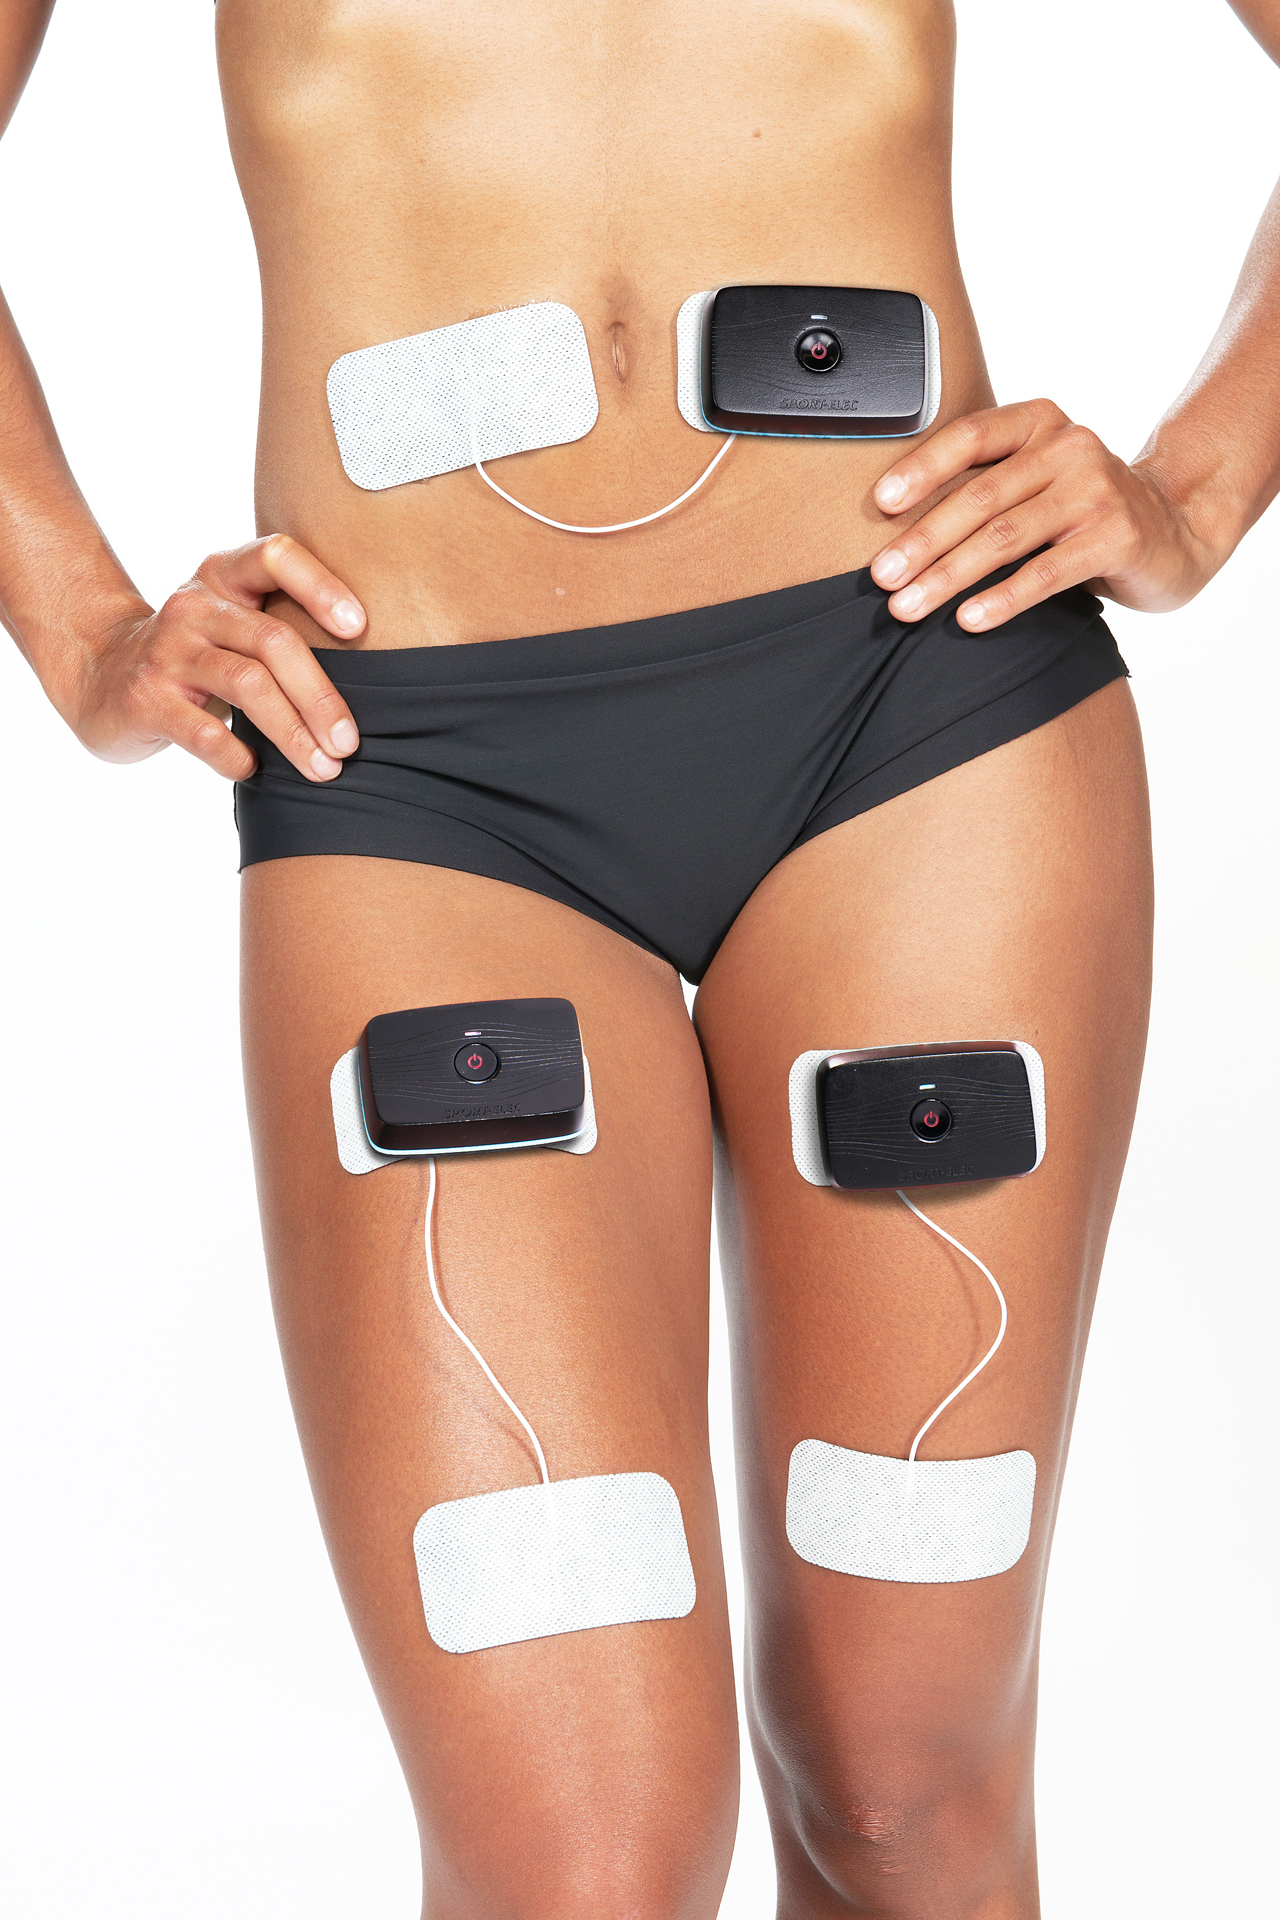 Electro-stimulateurs musculaire abdominaux, bras et jambes